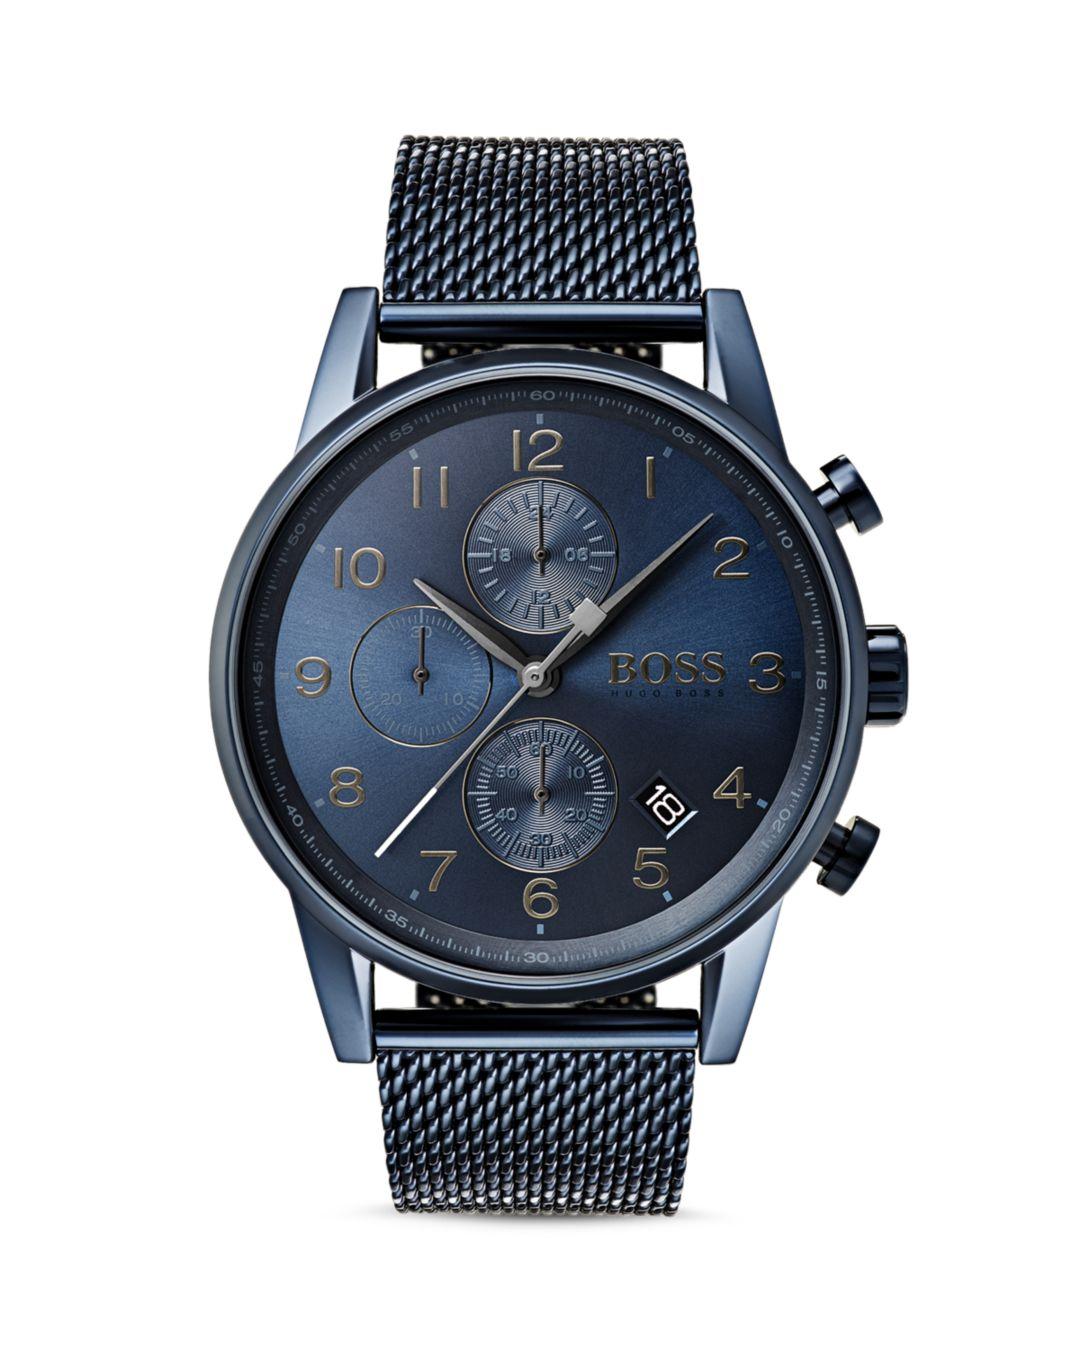 hugo boss blue strap watch